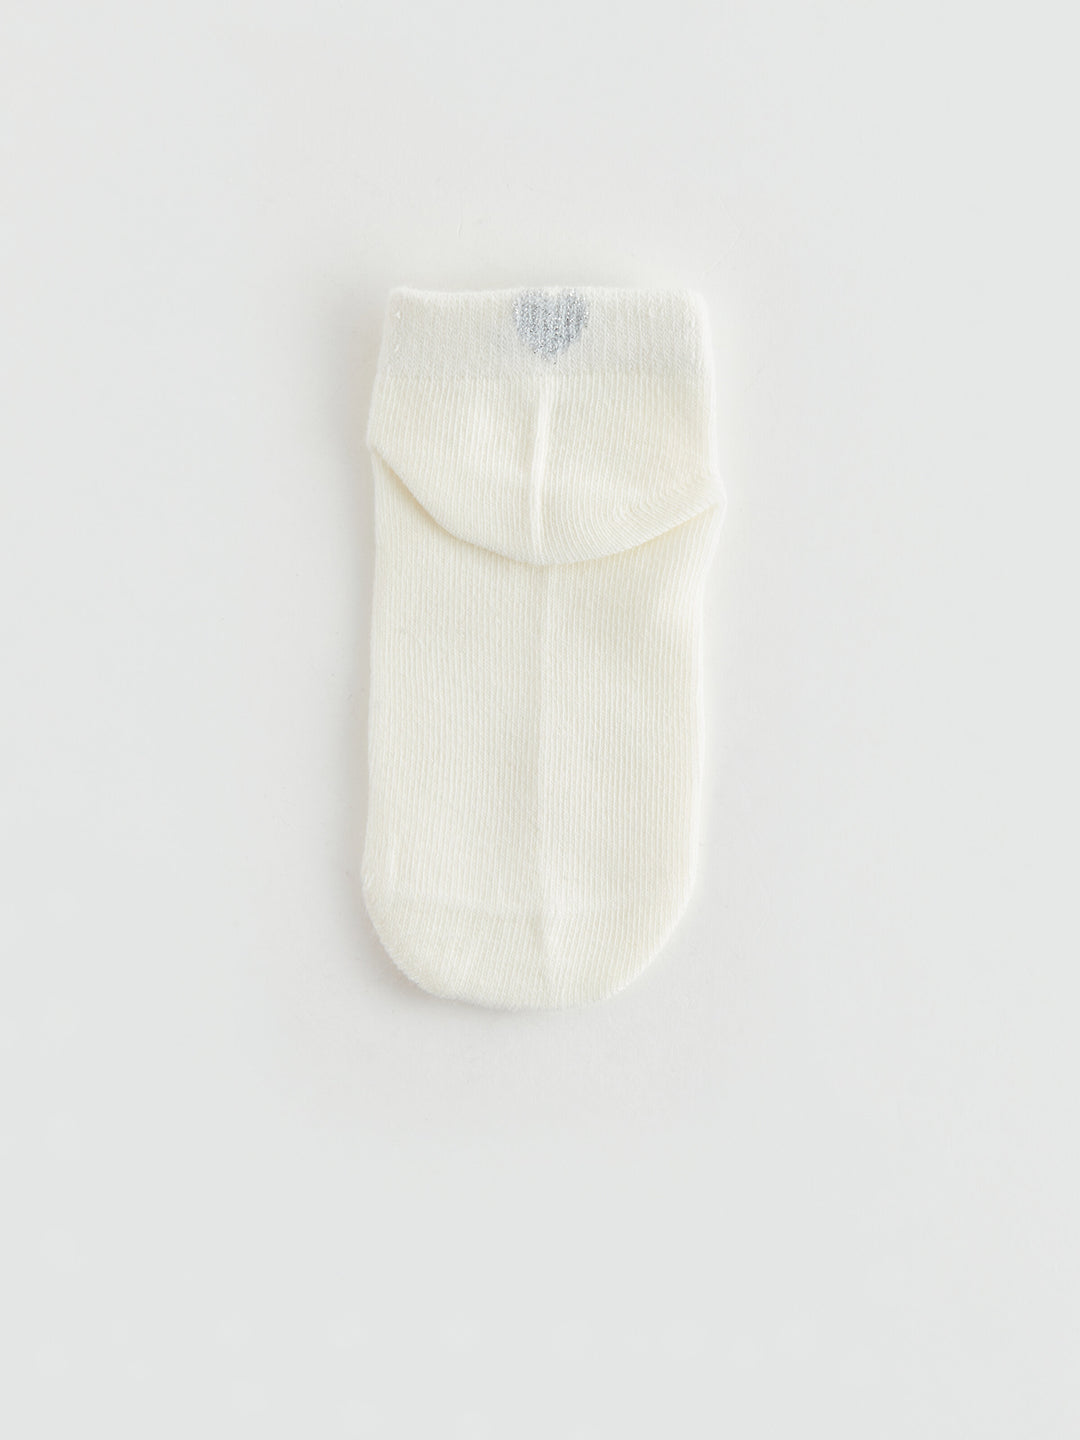 Printed Baby Girls Booties Socks 3-Piece